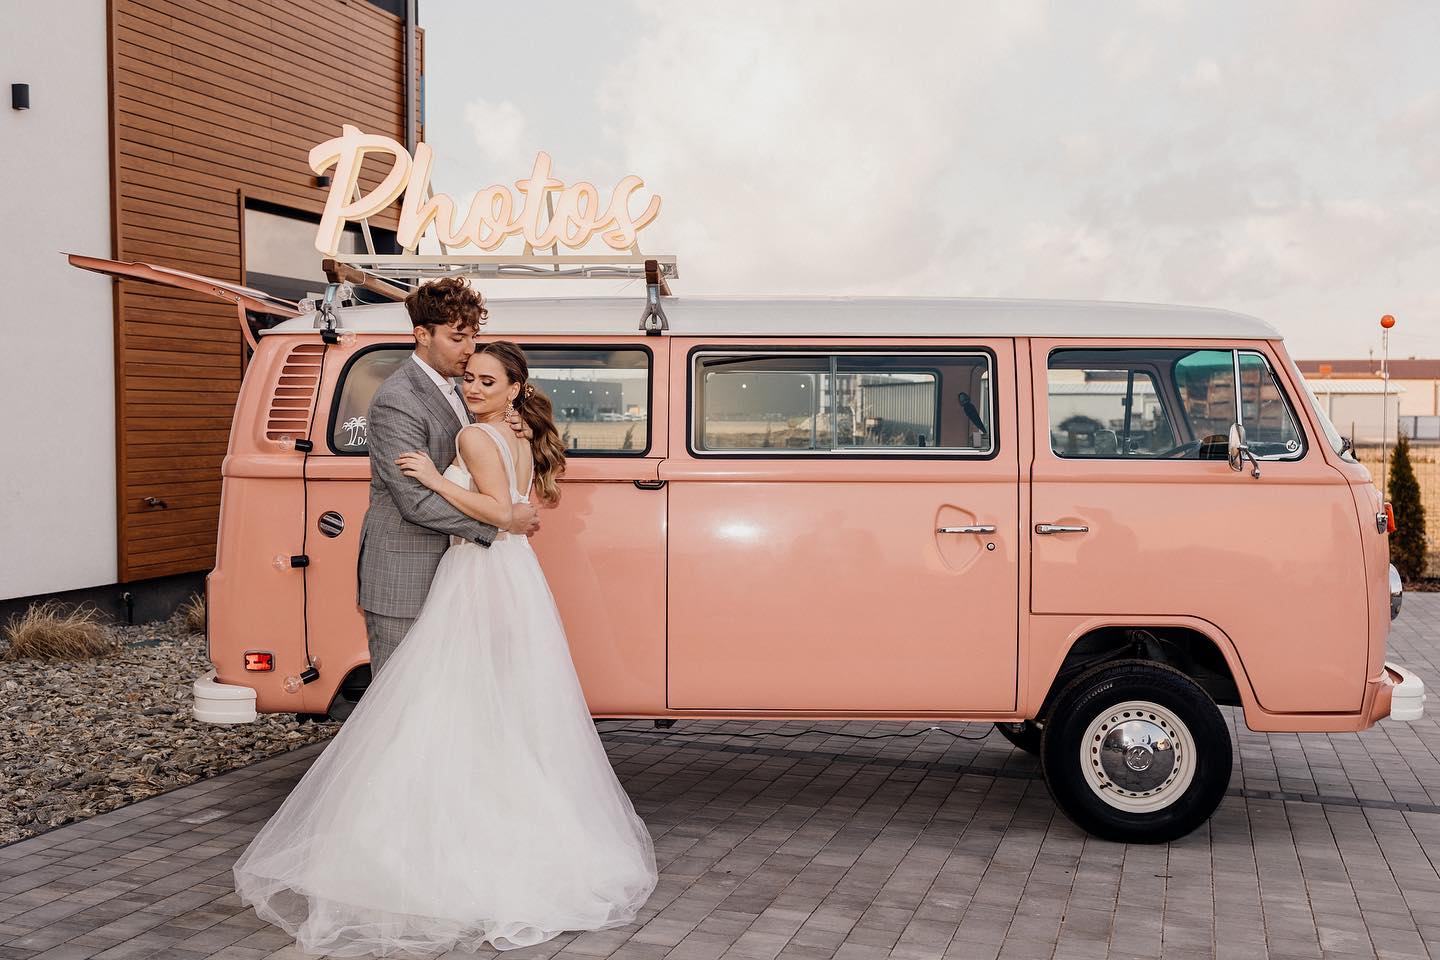 Wedding couple posing in front of a pink van